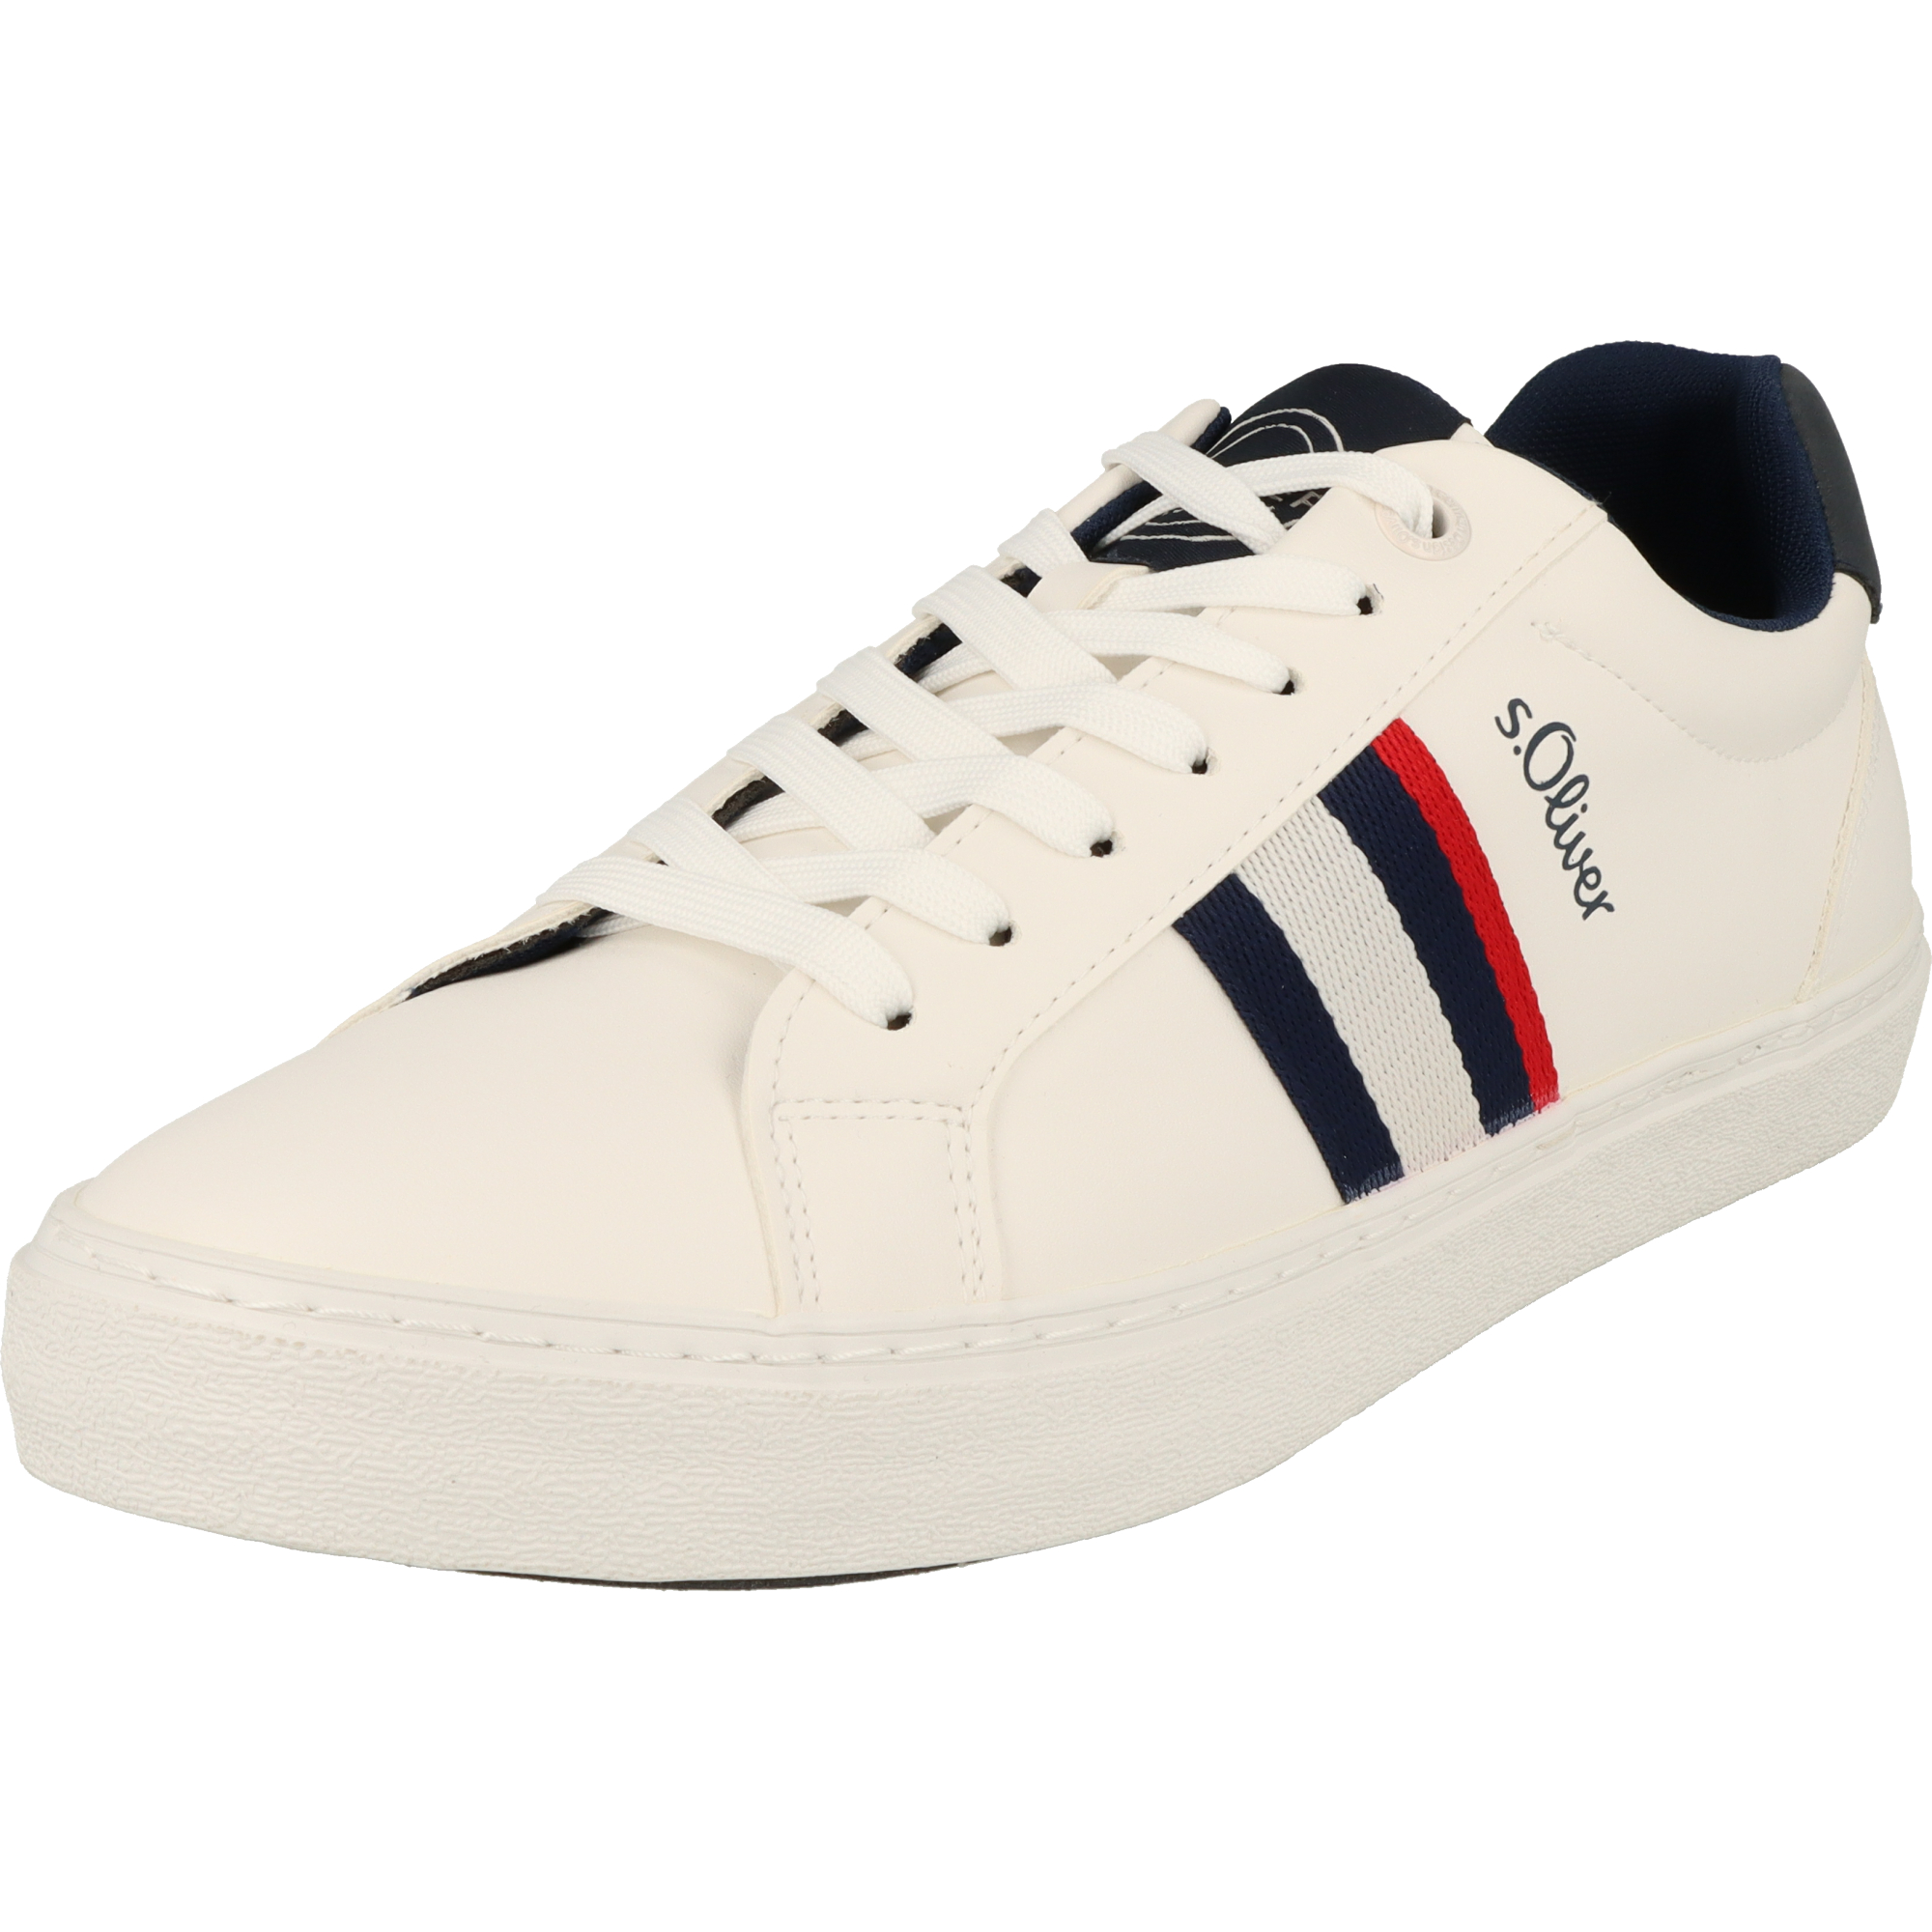 s.Oliver 5-13631-42 Herren Schuhe sportliche Sneaker Halbschuhe White